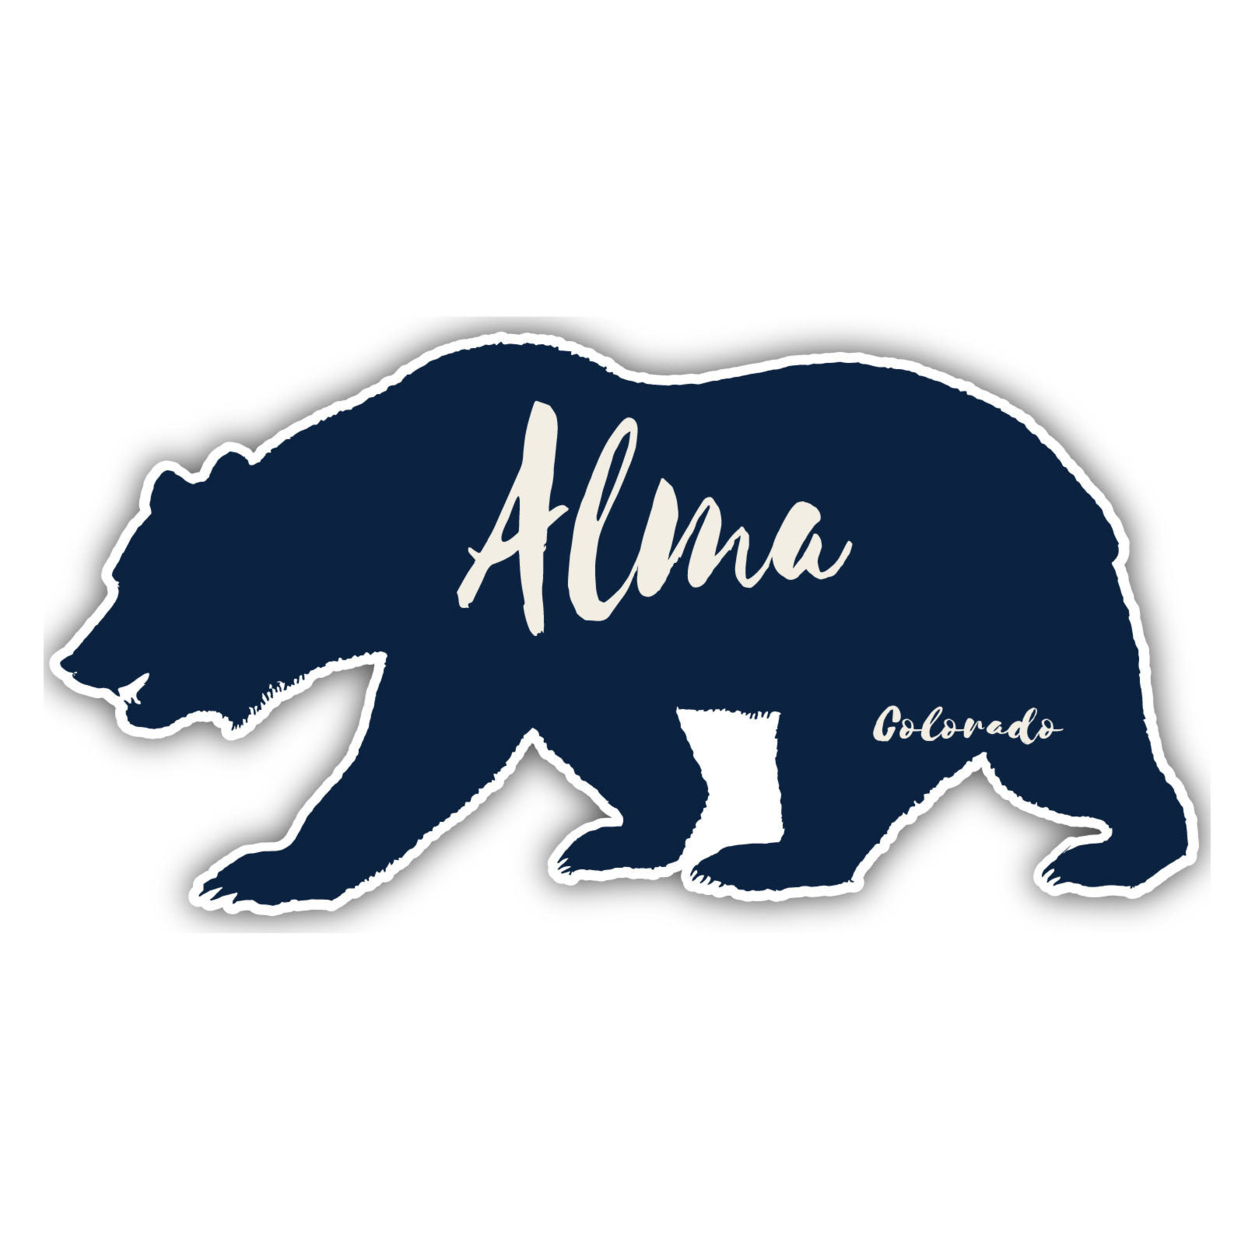 Alma Colorado Souvenir Decorative Stickers (Choose Theme And Size) - 4-Pack, 6-Inch, Bear